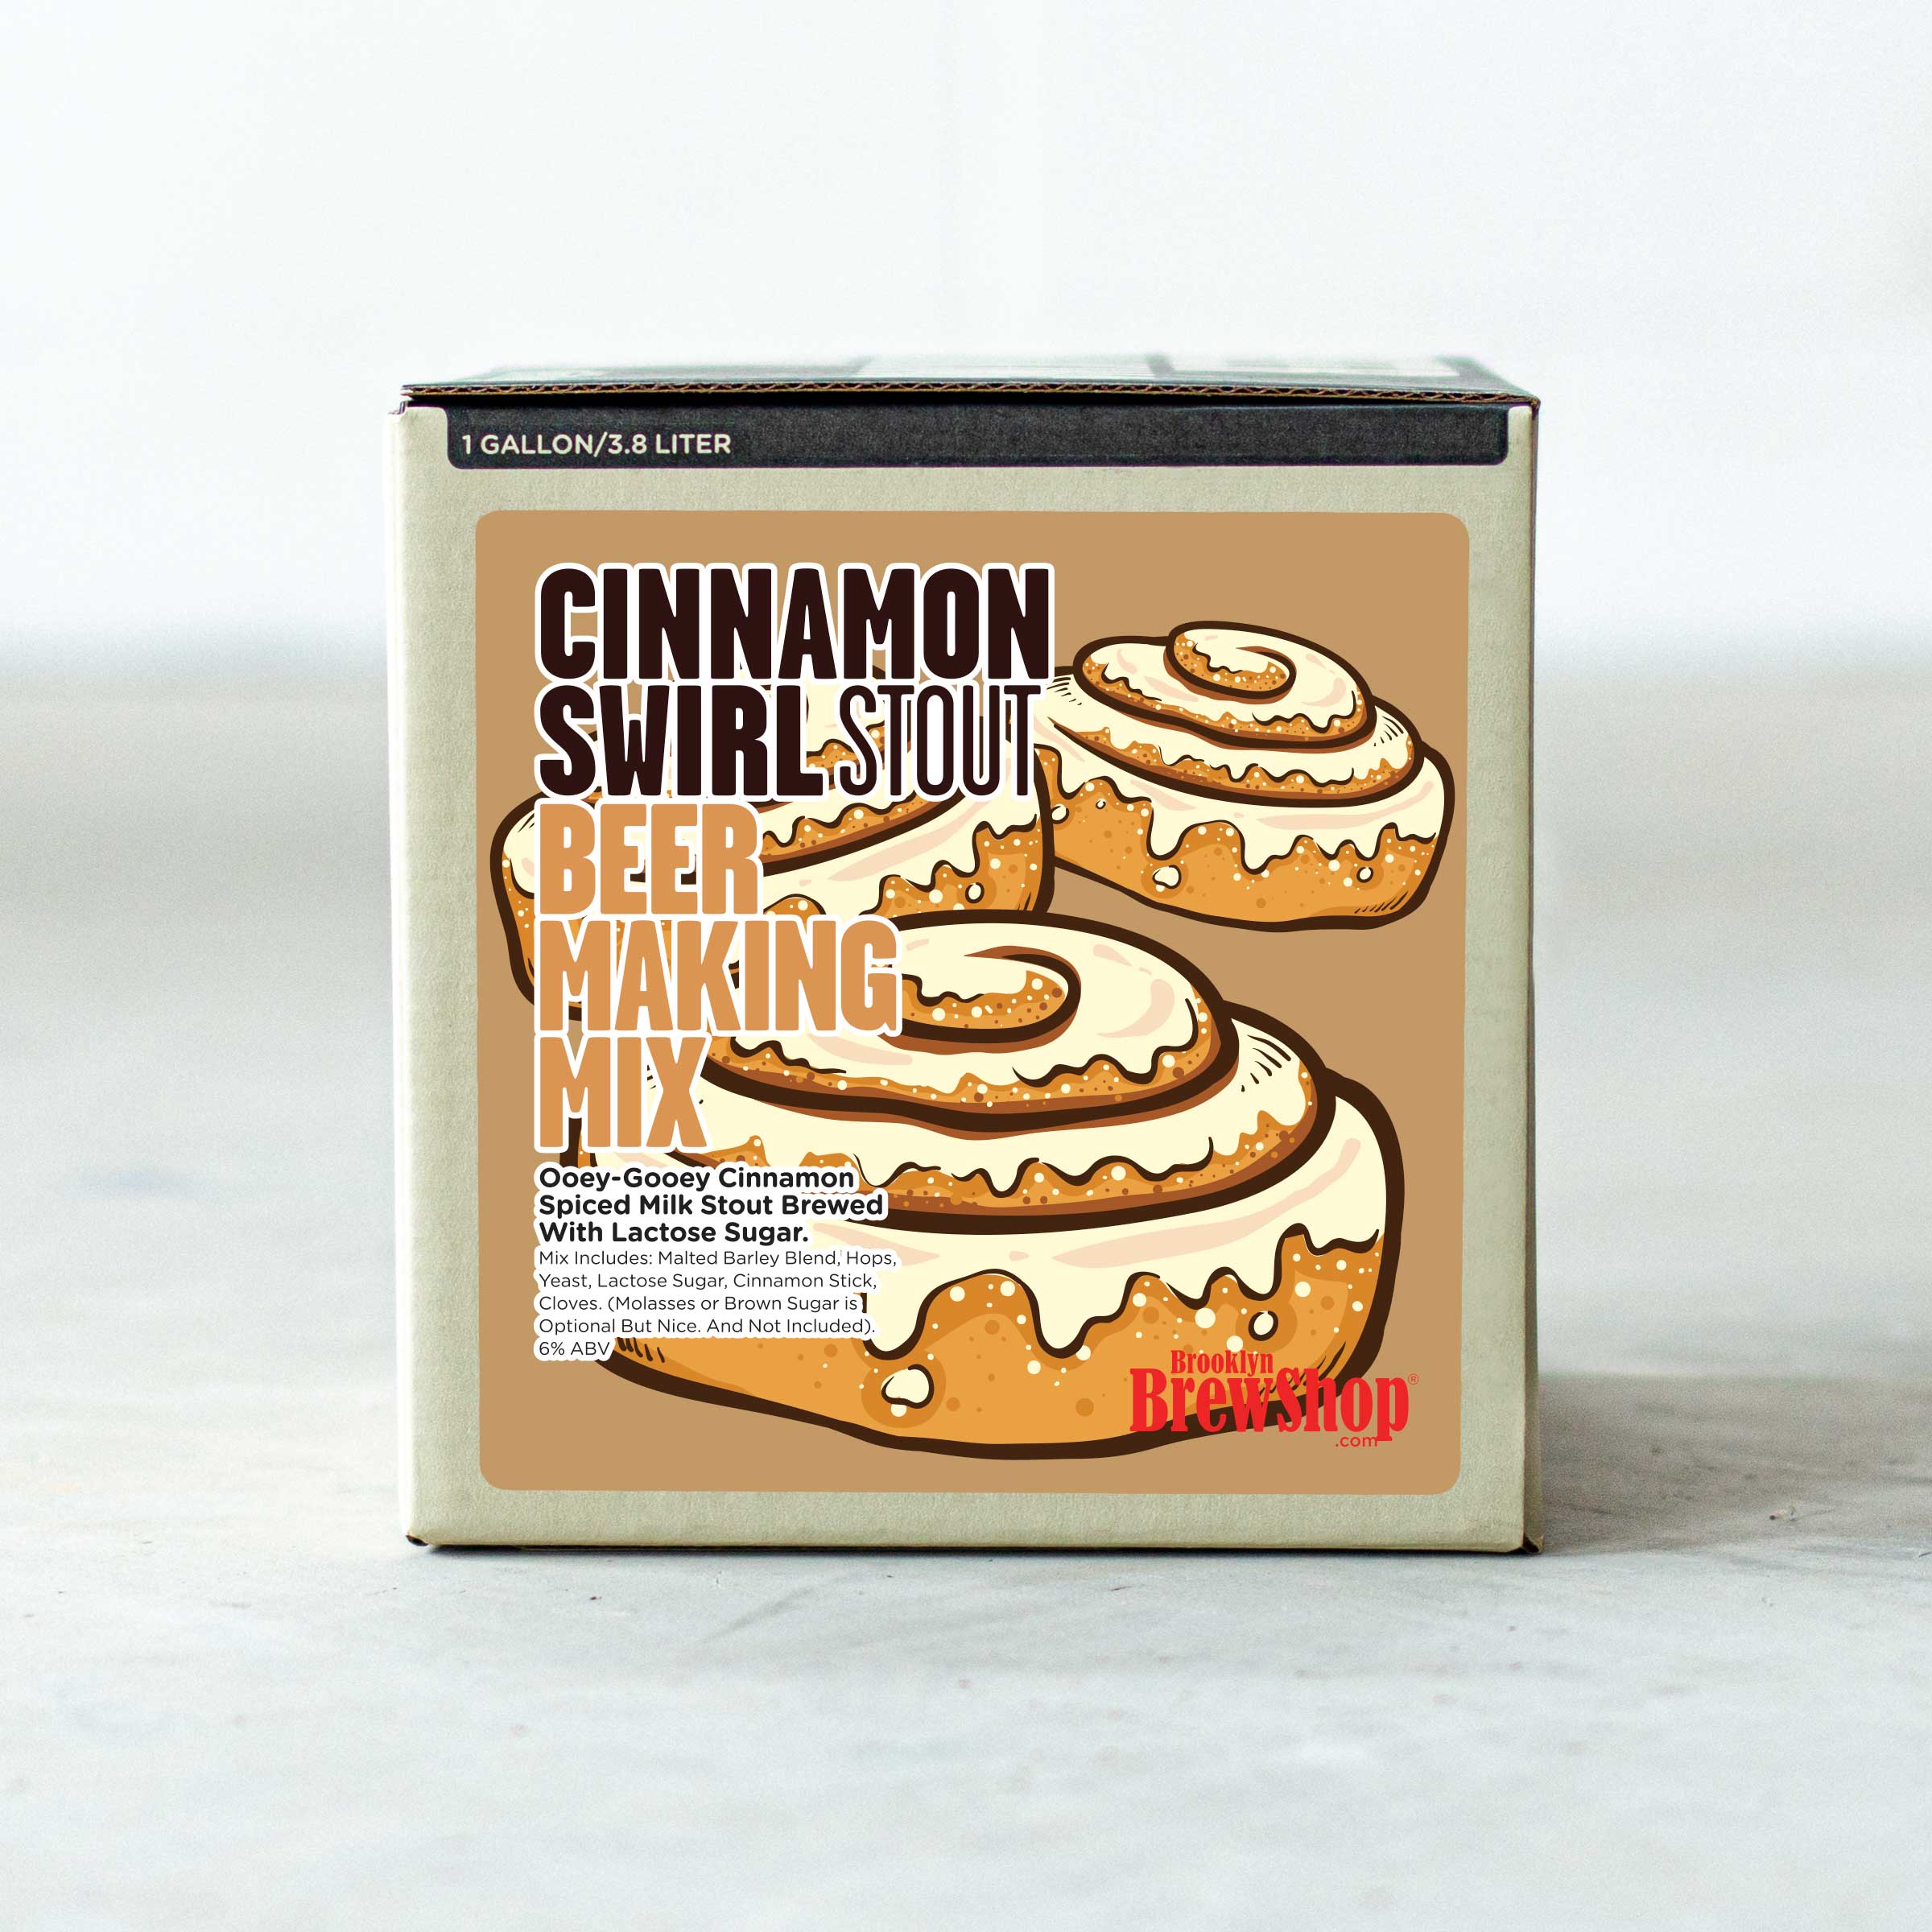 Image of Cinnamon Swirl Stout: Beer Making Mix